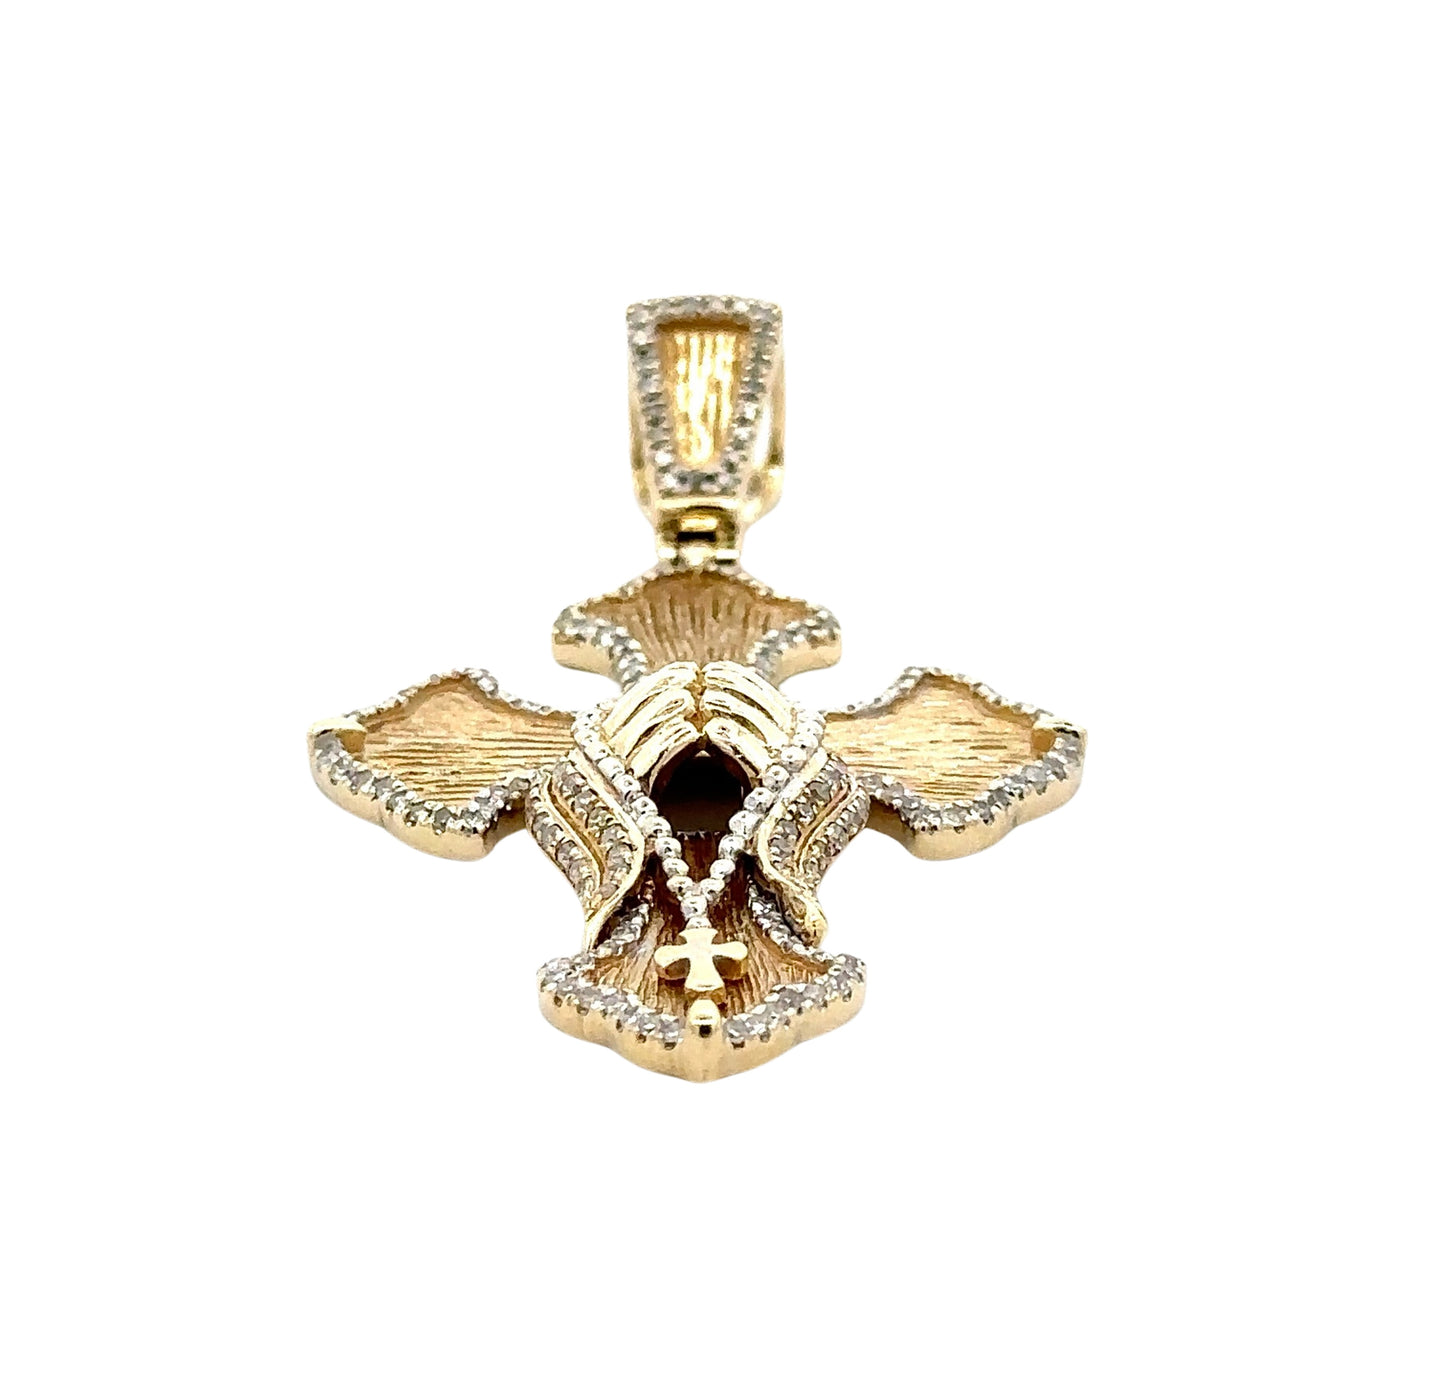 Bottom of yellow gold cross pendant